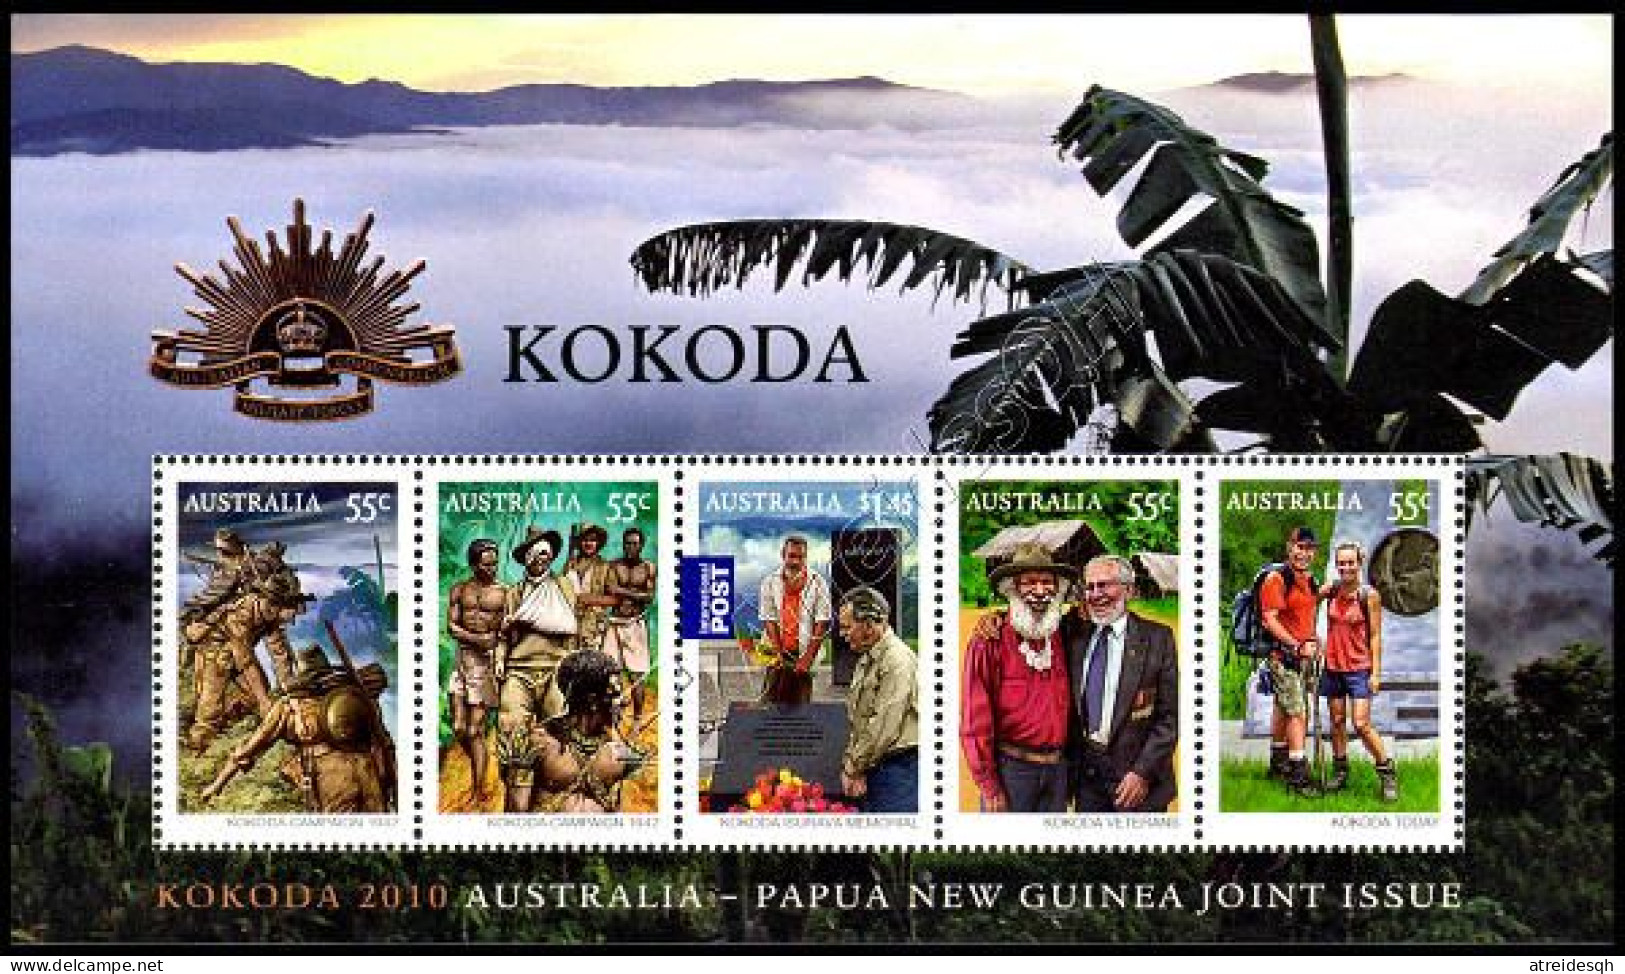 [Q] Australia 2010: Foglietto Kokoda (congiunta Papua Nuova Guinea) / Kokoda S/S (joint Issue With Papua New Guinea) ** - Emisiones Comunes